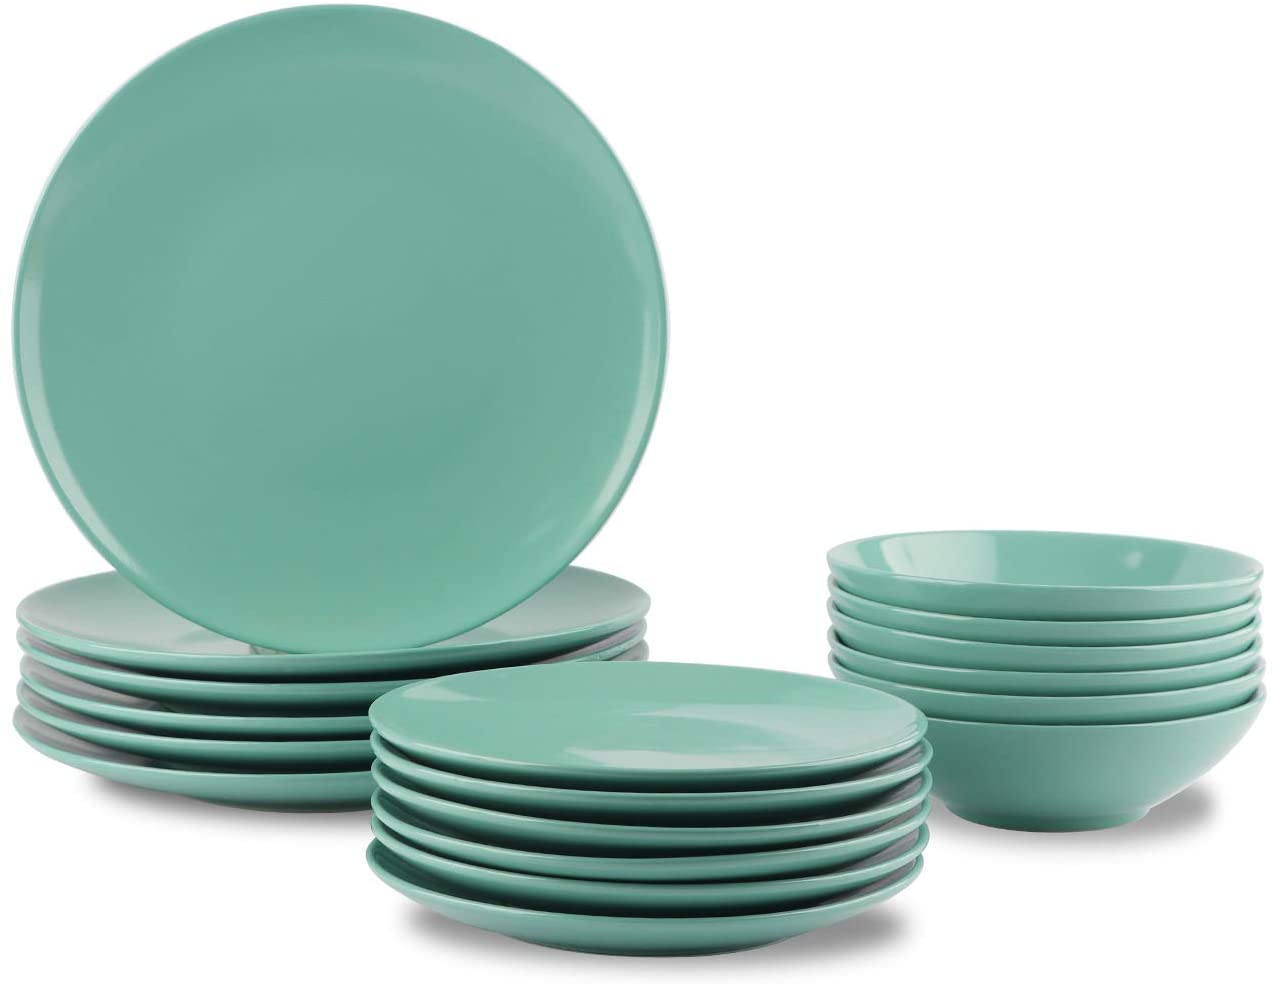 AmazonBasics Stoneware Everyday Dinnerware Set